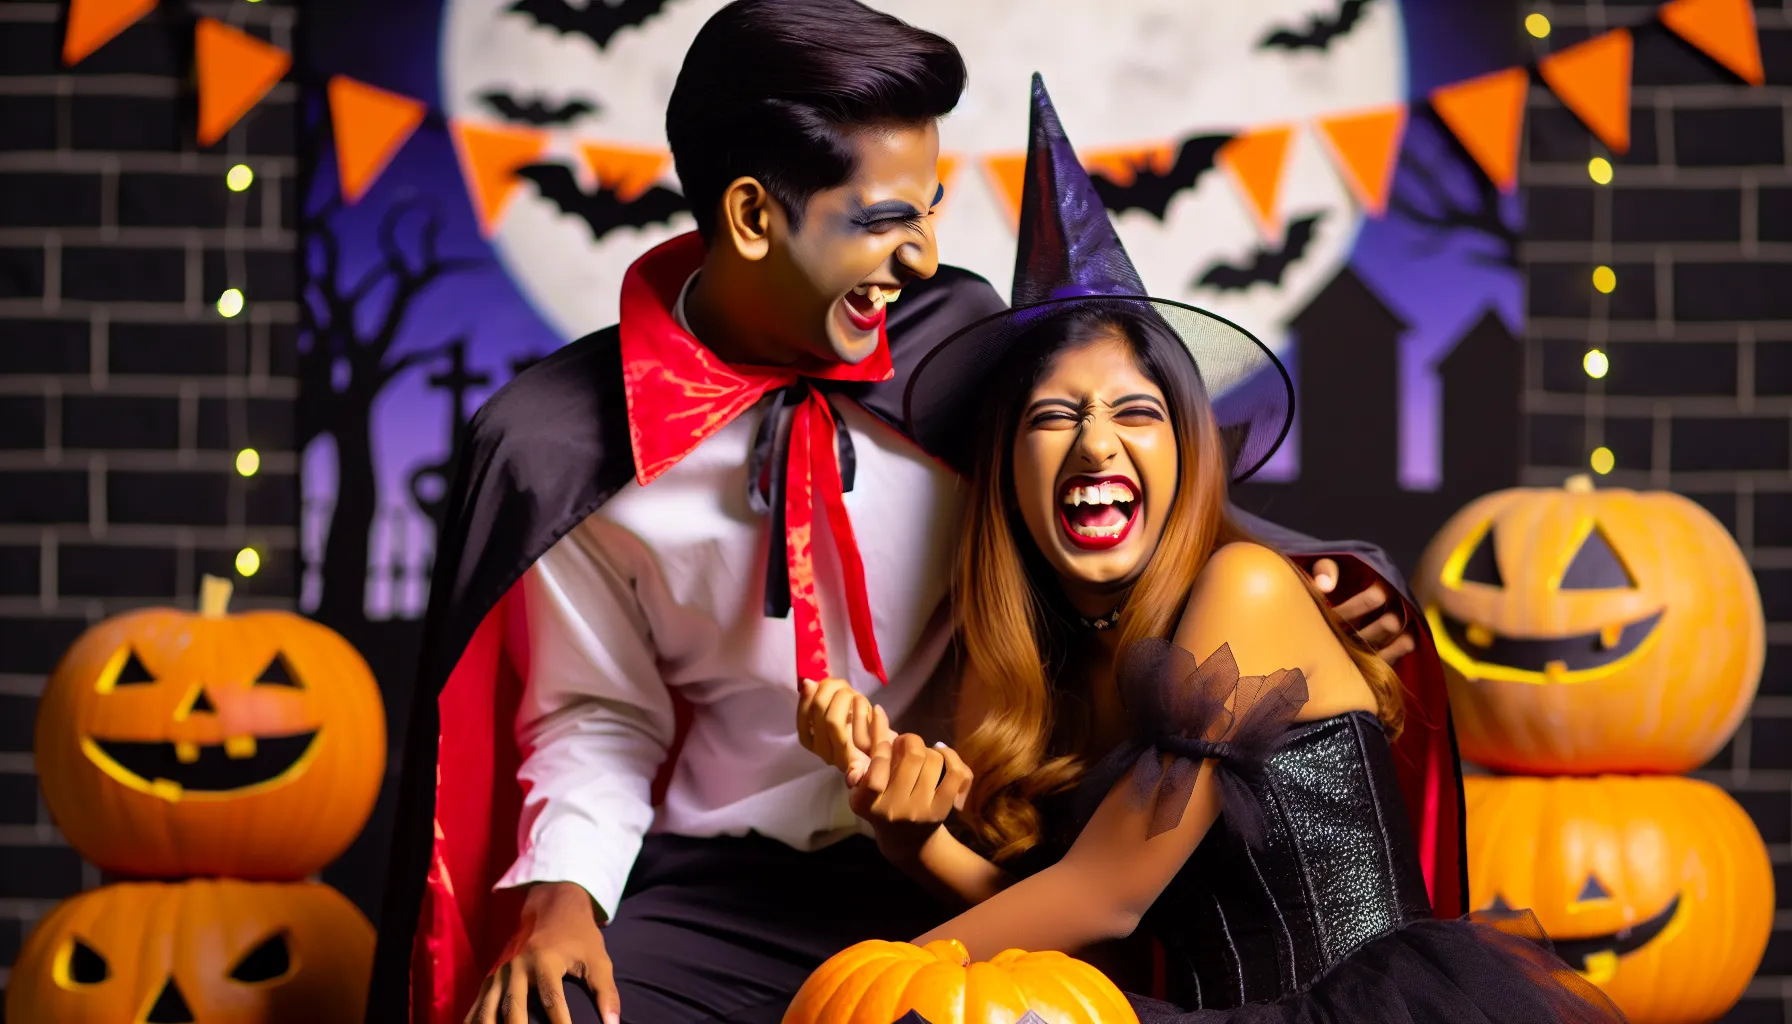 Couple in Halloween costumes amidst pumpkins